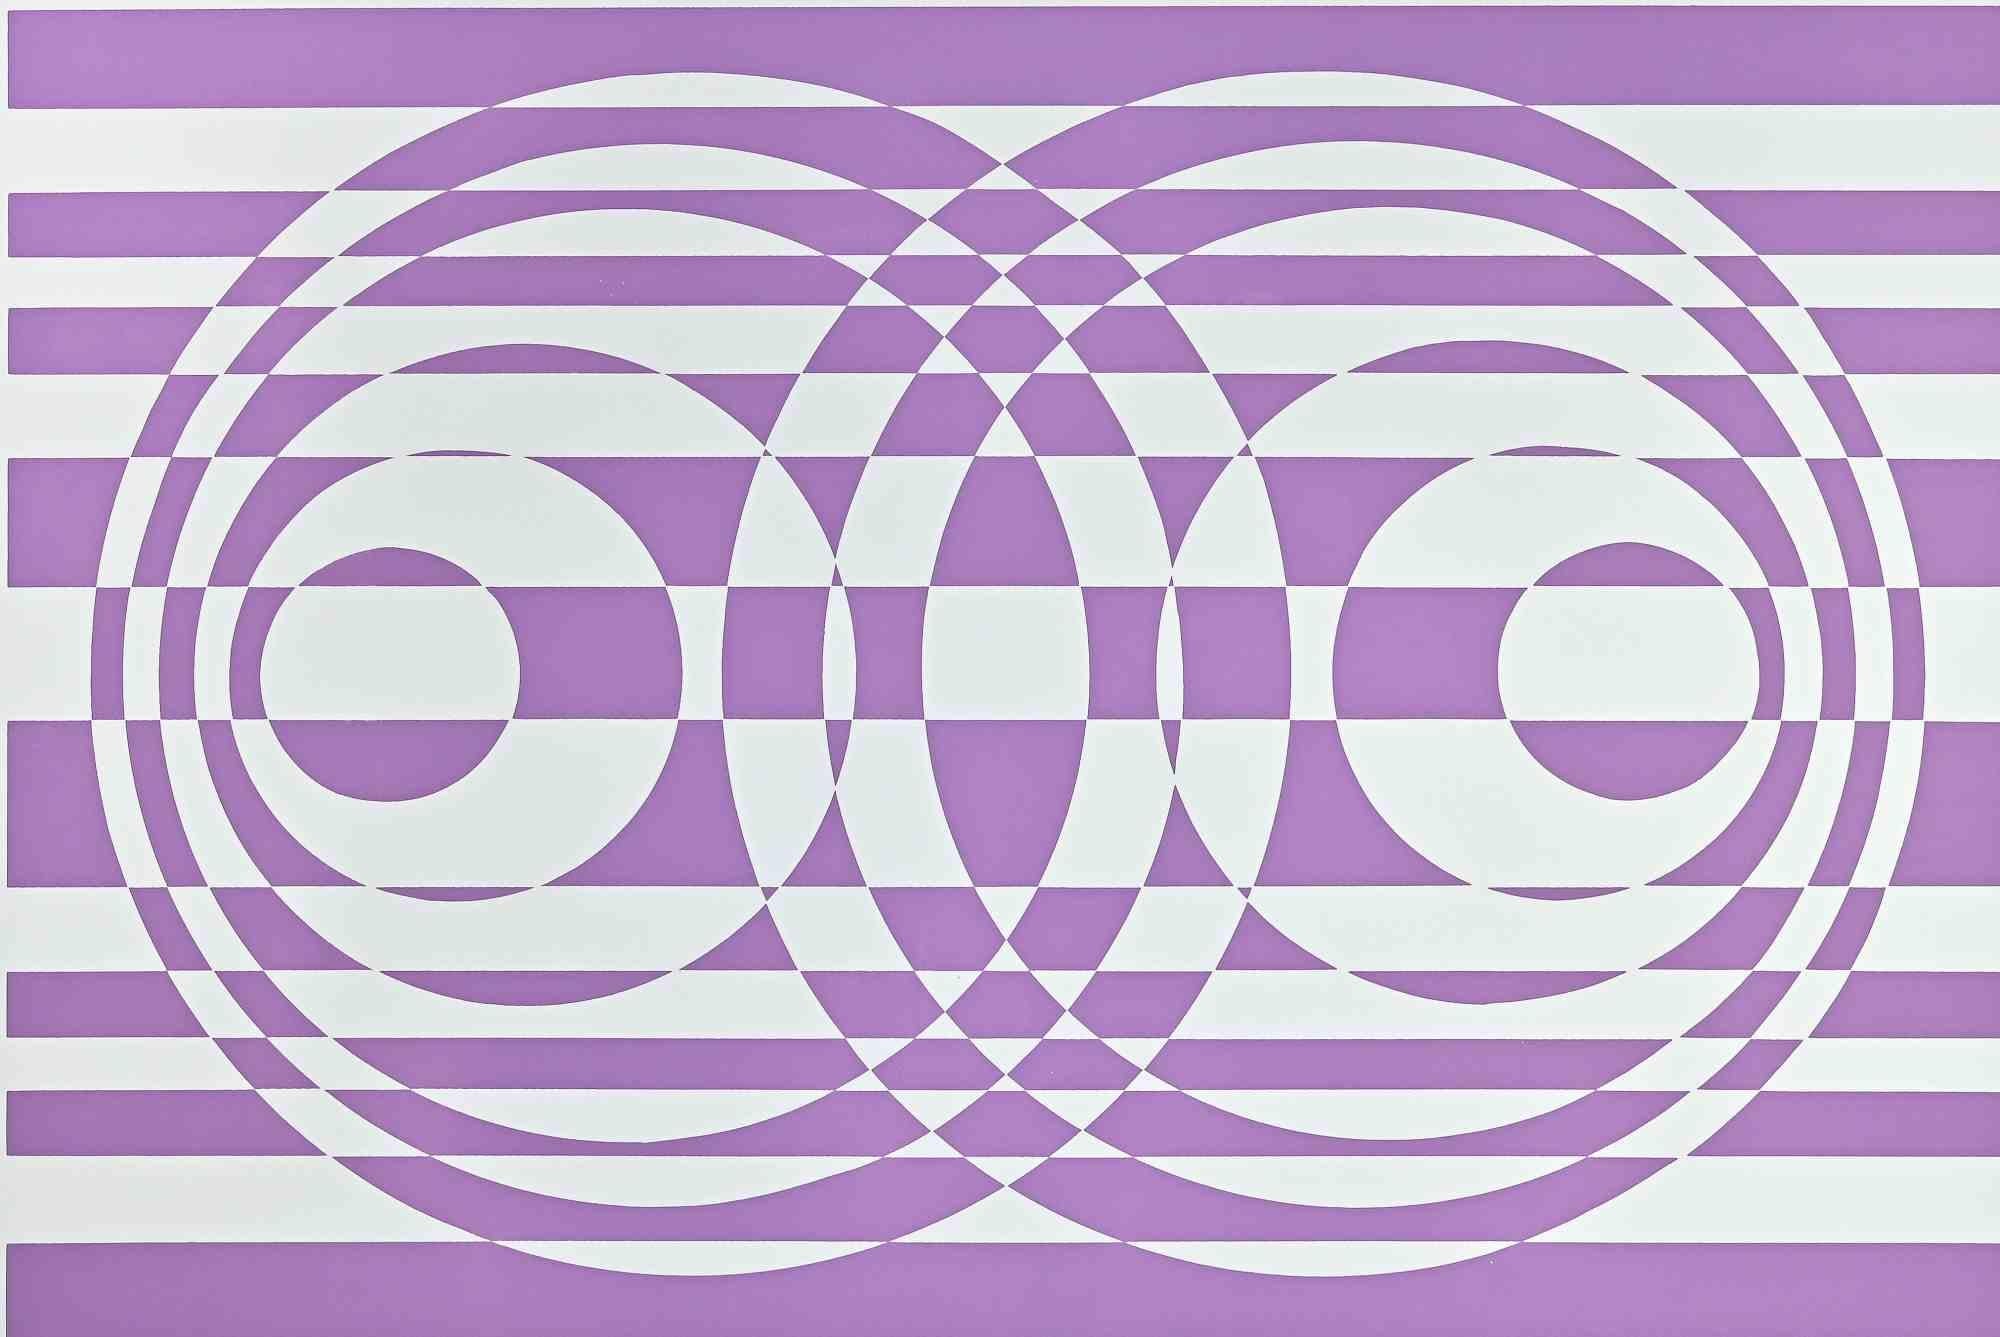 Abstract Print Victor Debach - Composition abstraite violette - Impression sérigraphiée de V. Debach - 1970